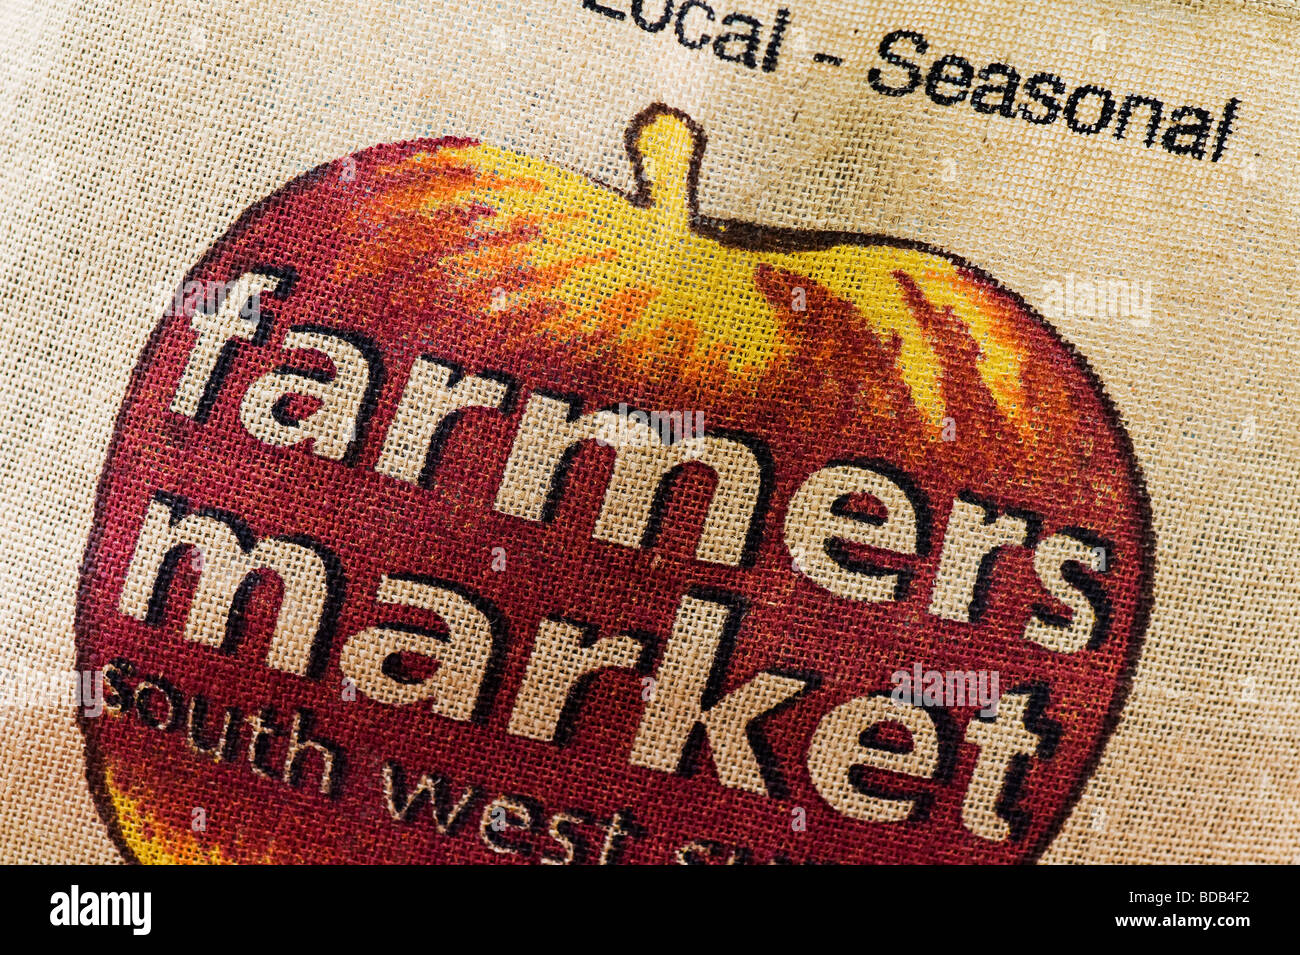 Farmers market hessian carrier bag Stock Photo